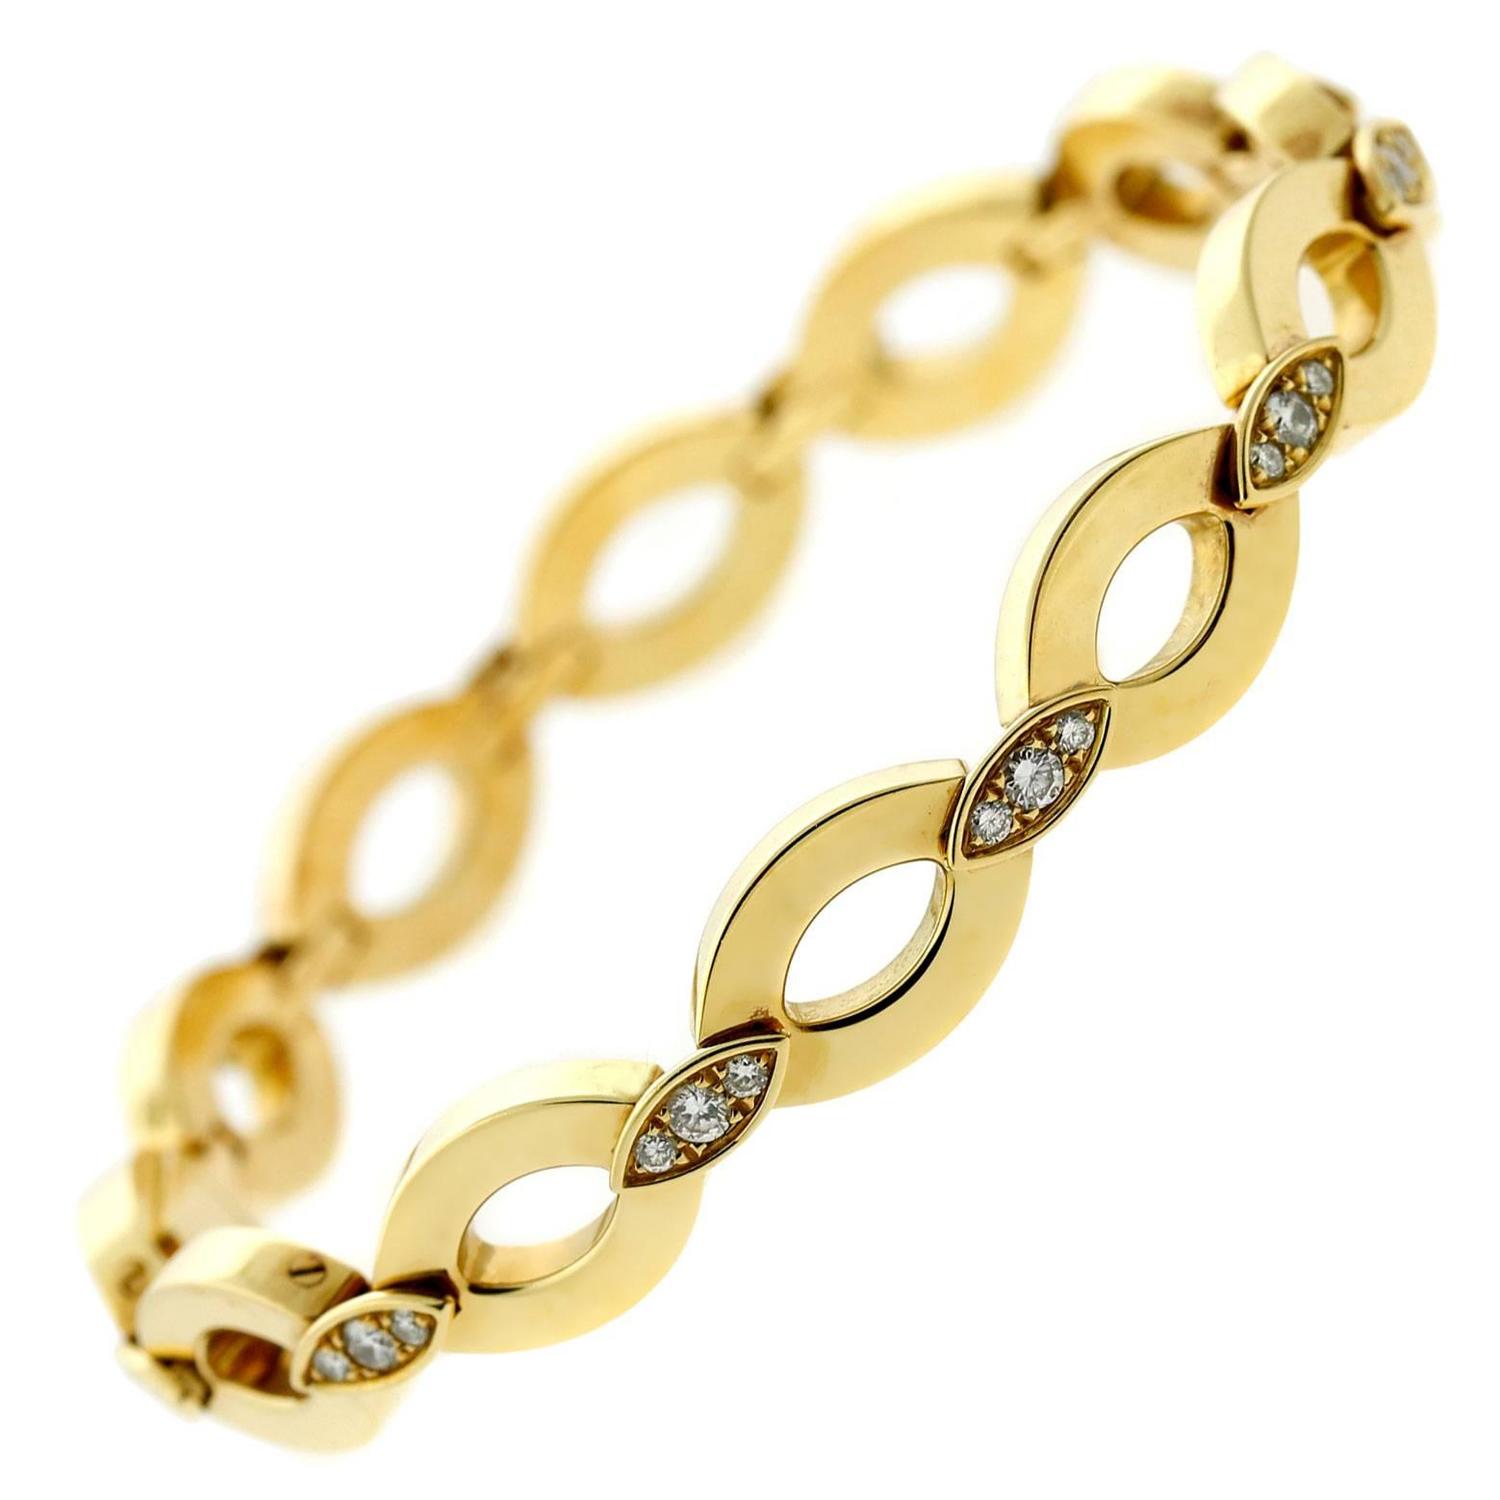 Cartier Diadea Diamond Gold Bracelet For Sale at 1stdibs